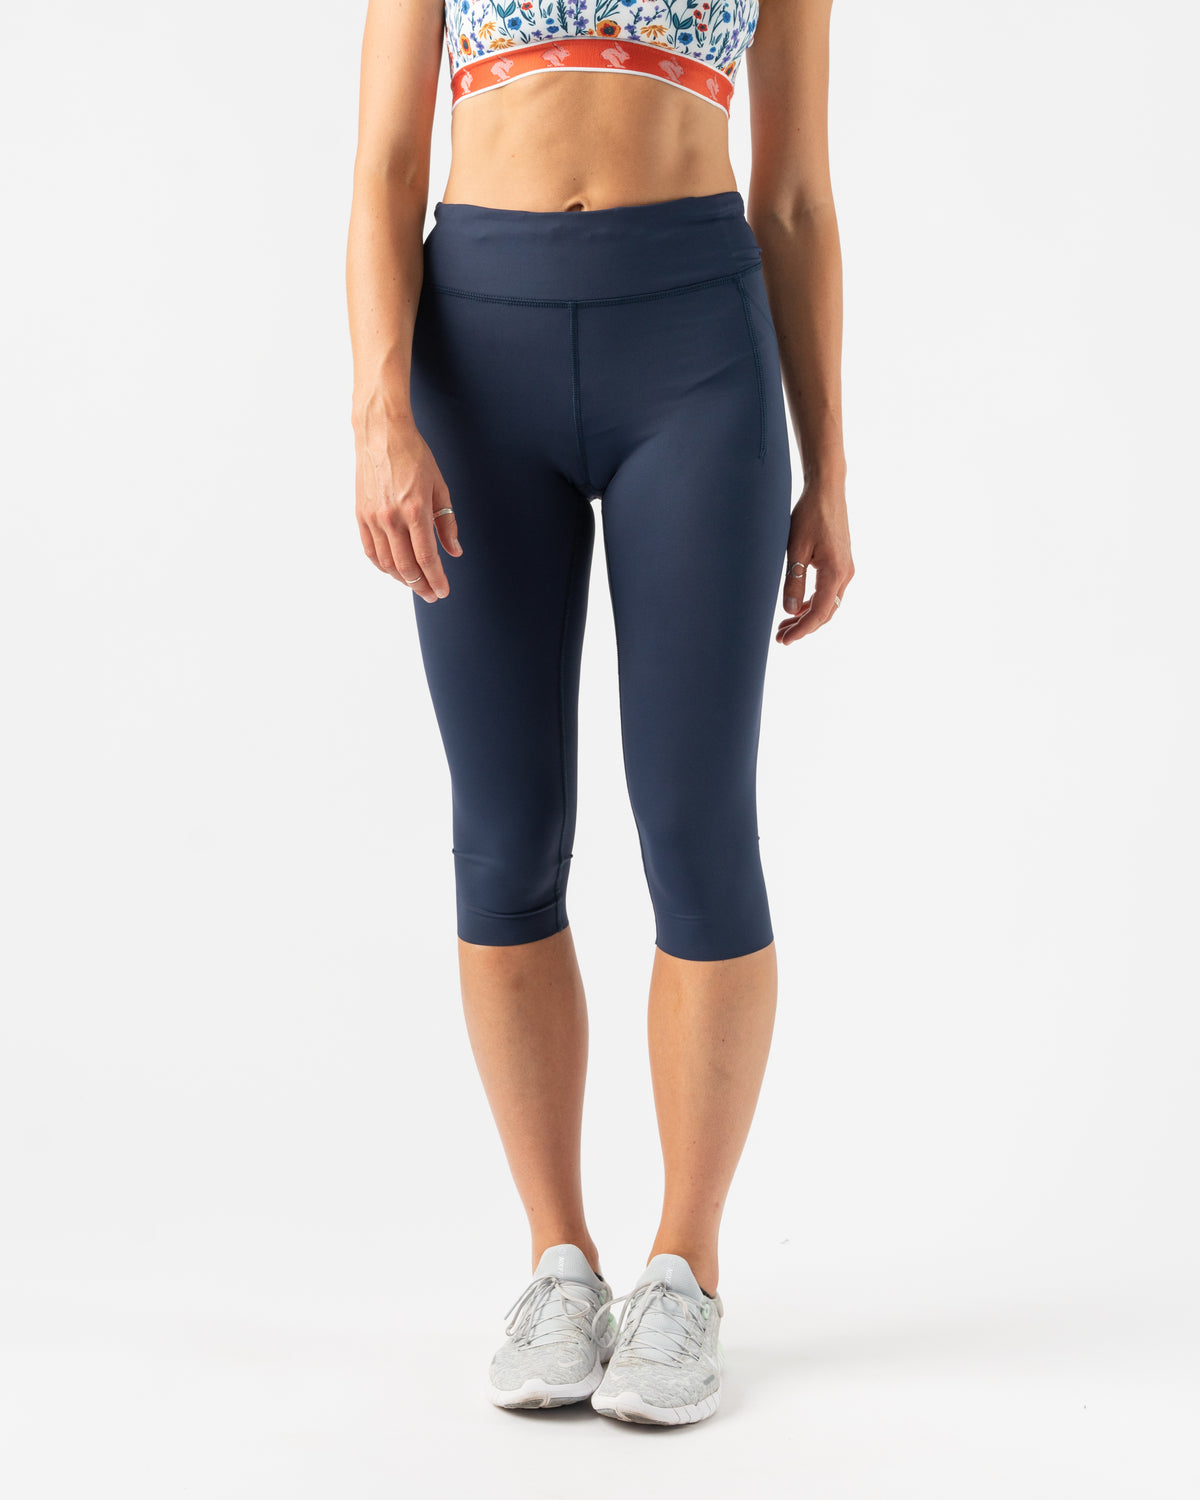 Grey Sweatpants season is just as exciting as Yoga pants season. 😂😂